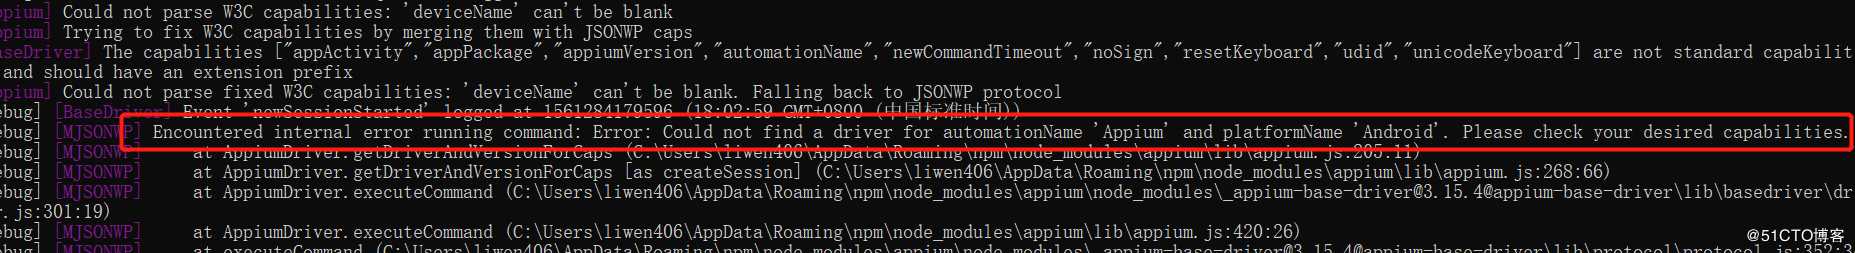 javav语言启动Appium v1.12.0启动错误记录